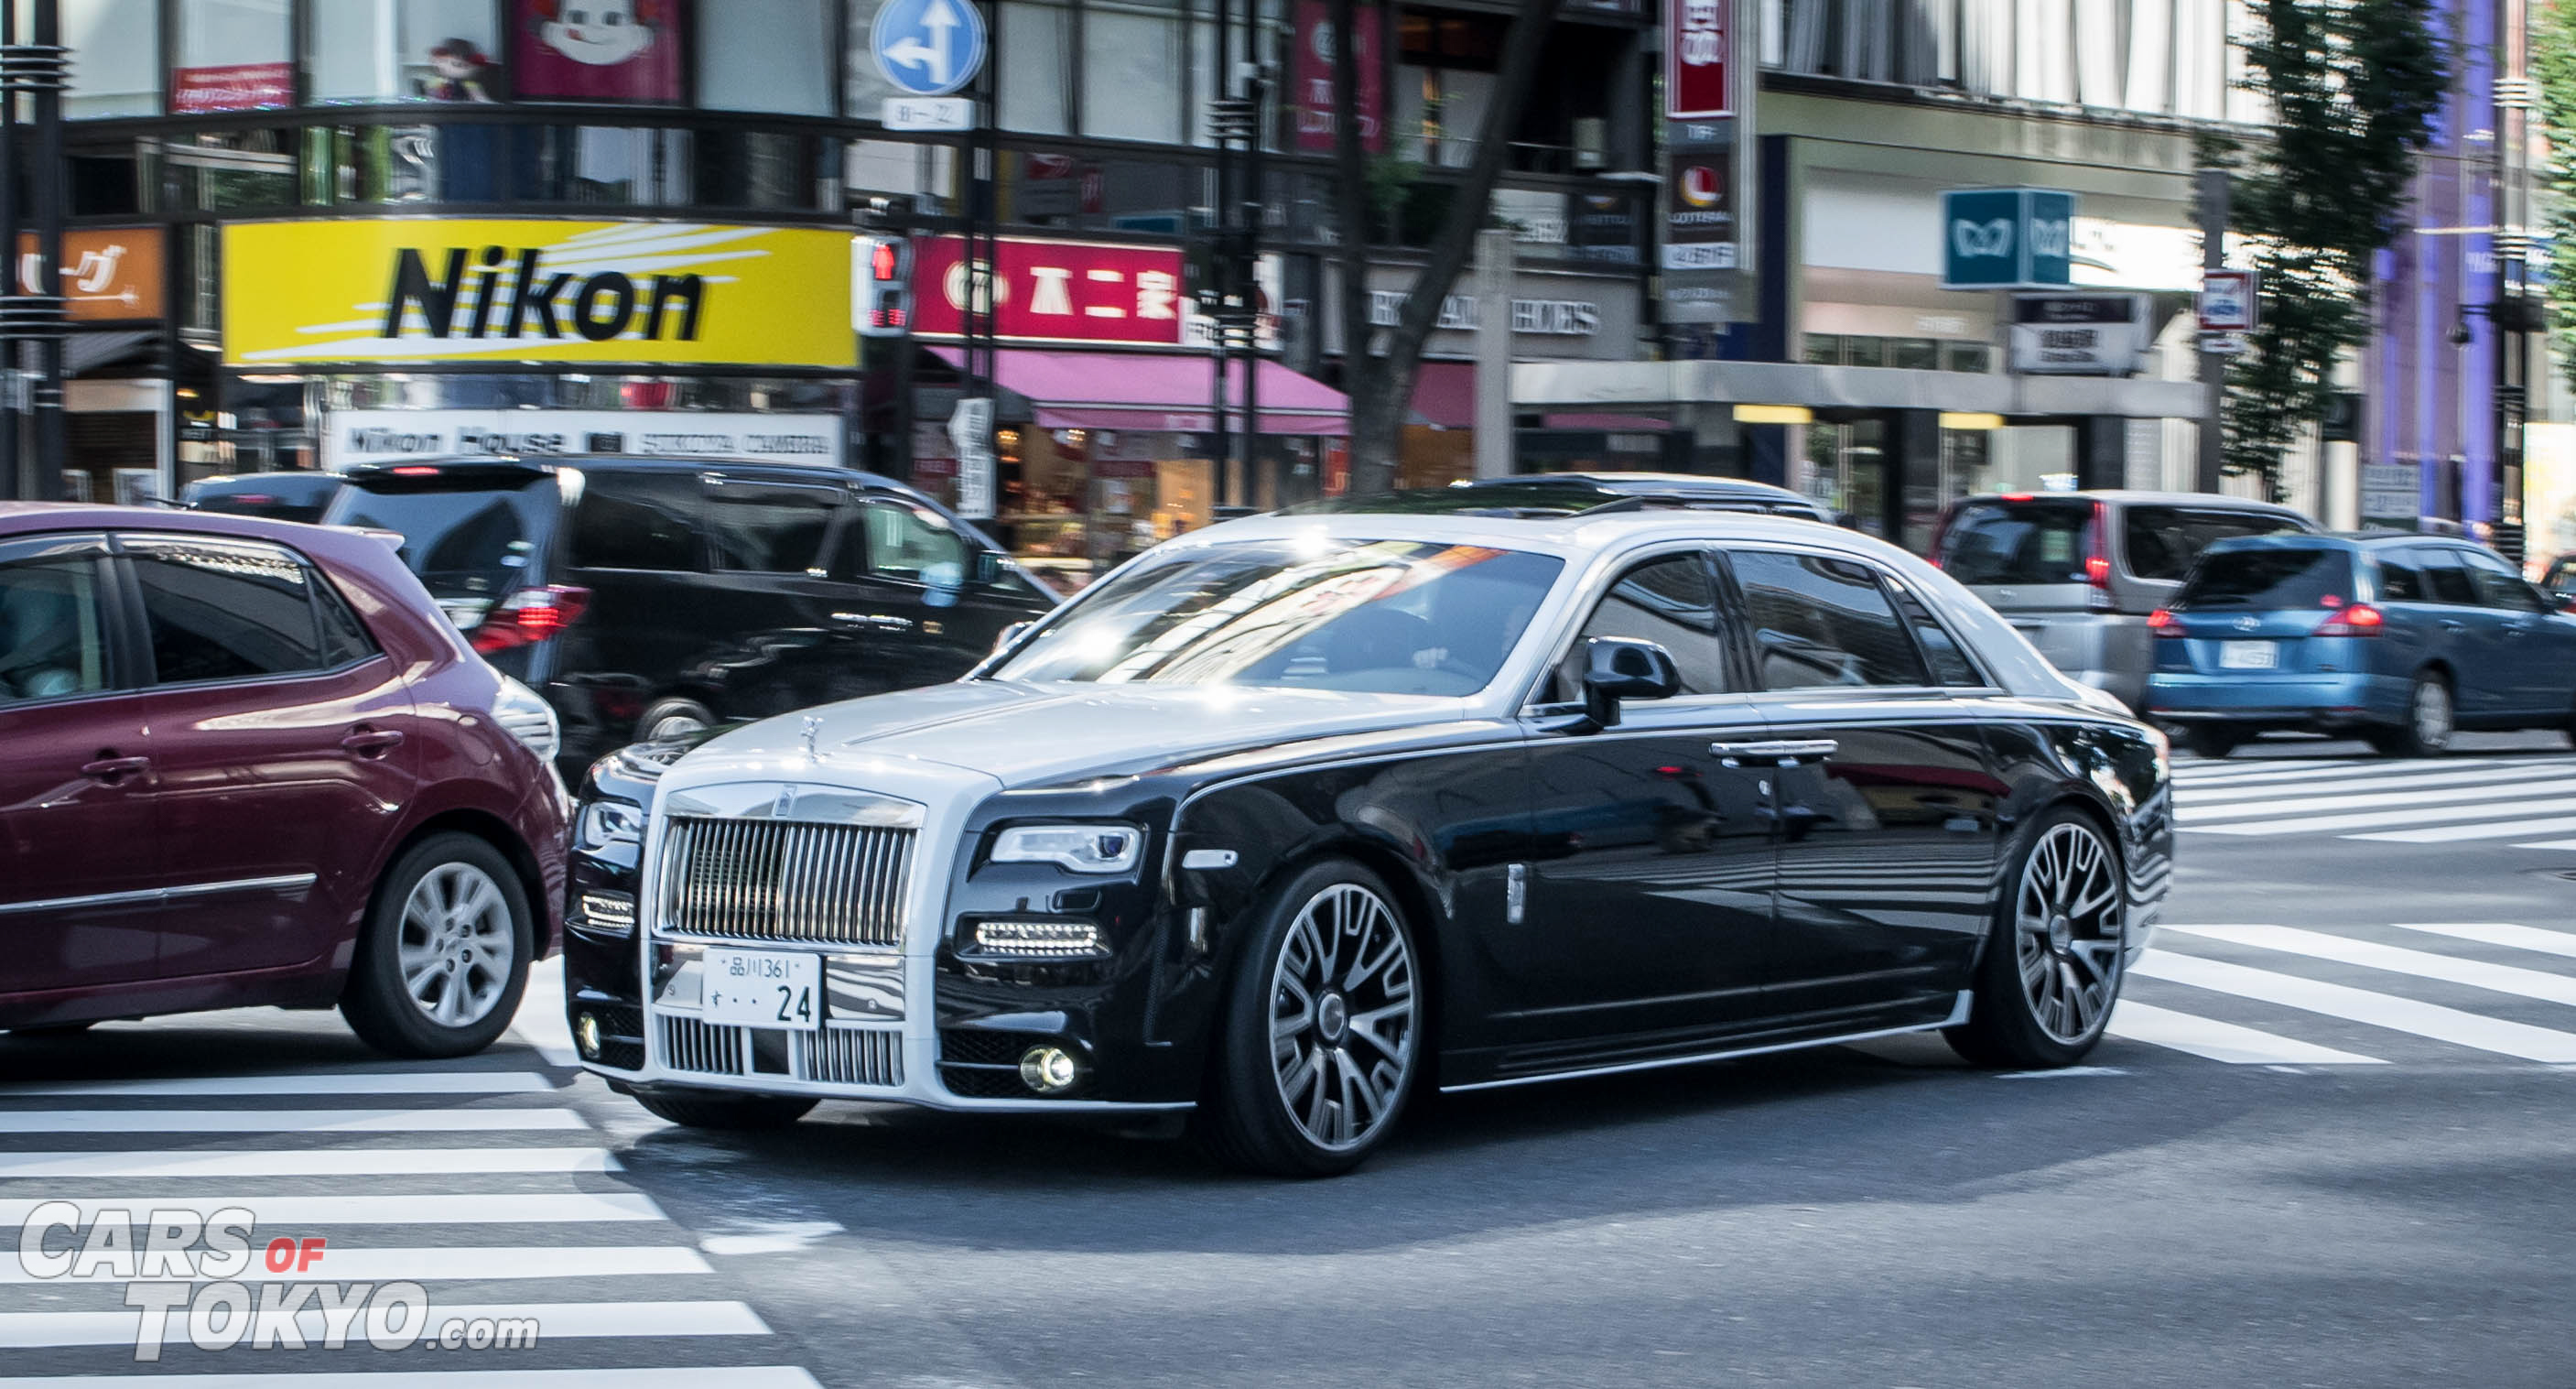 cars-of-tokyo-luxury-rolls-royce-ghost-mansory